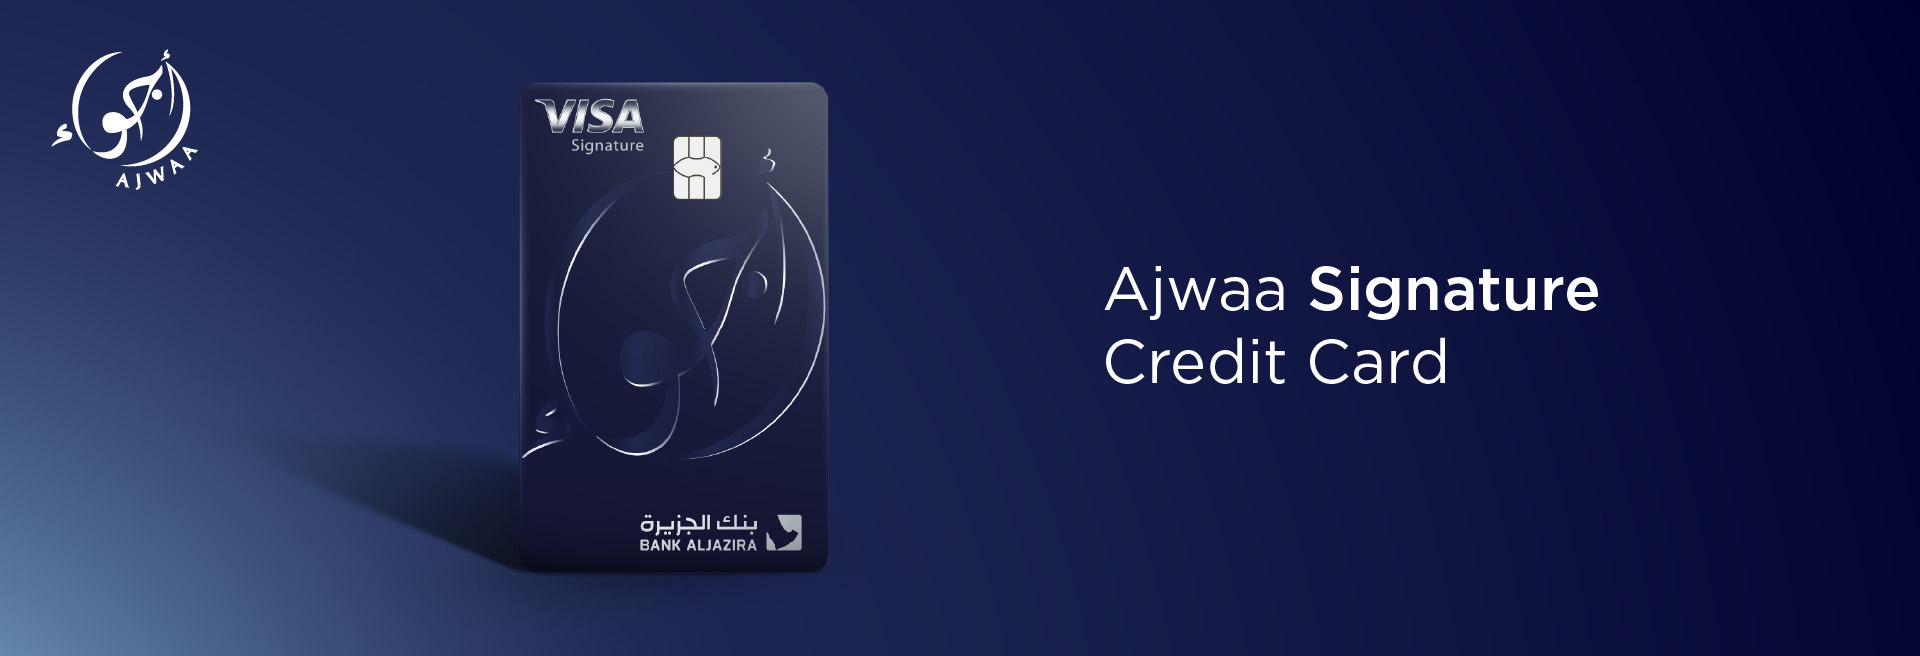 Ajwaa-Signature-Card-Benefits